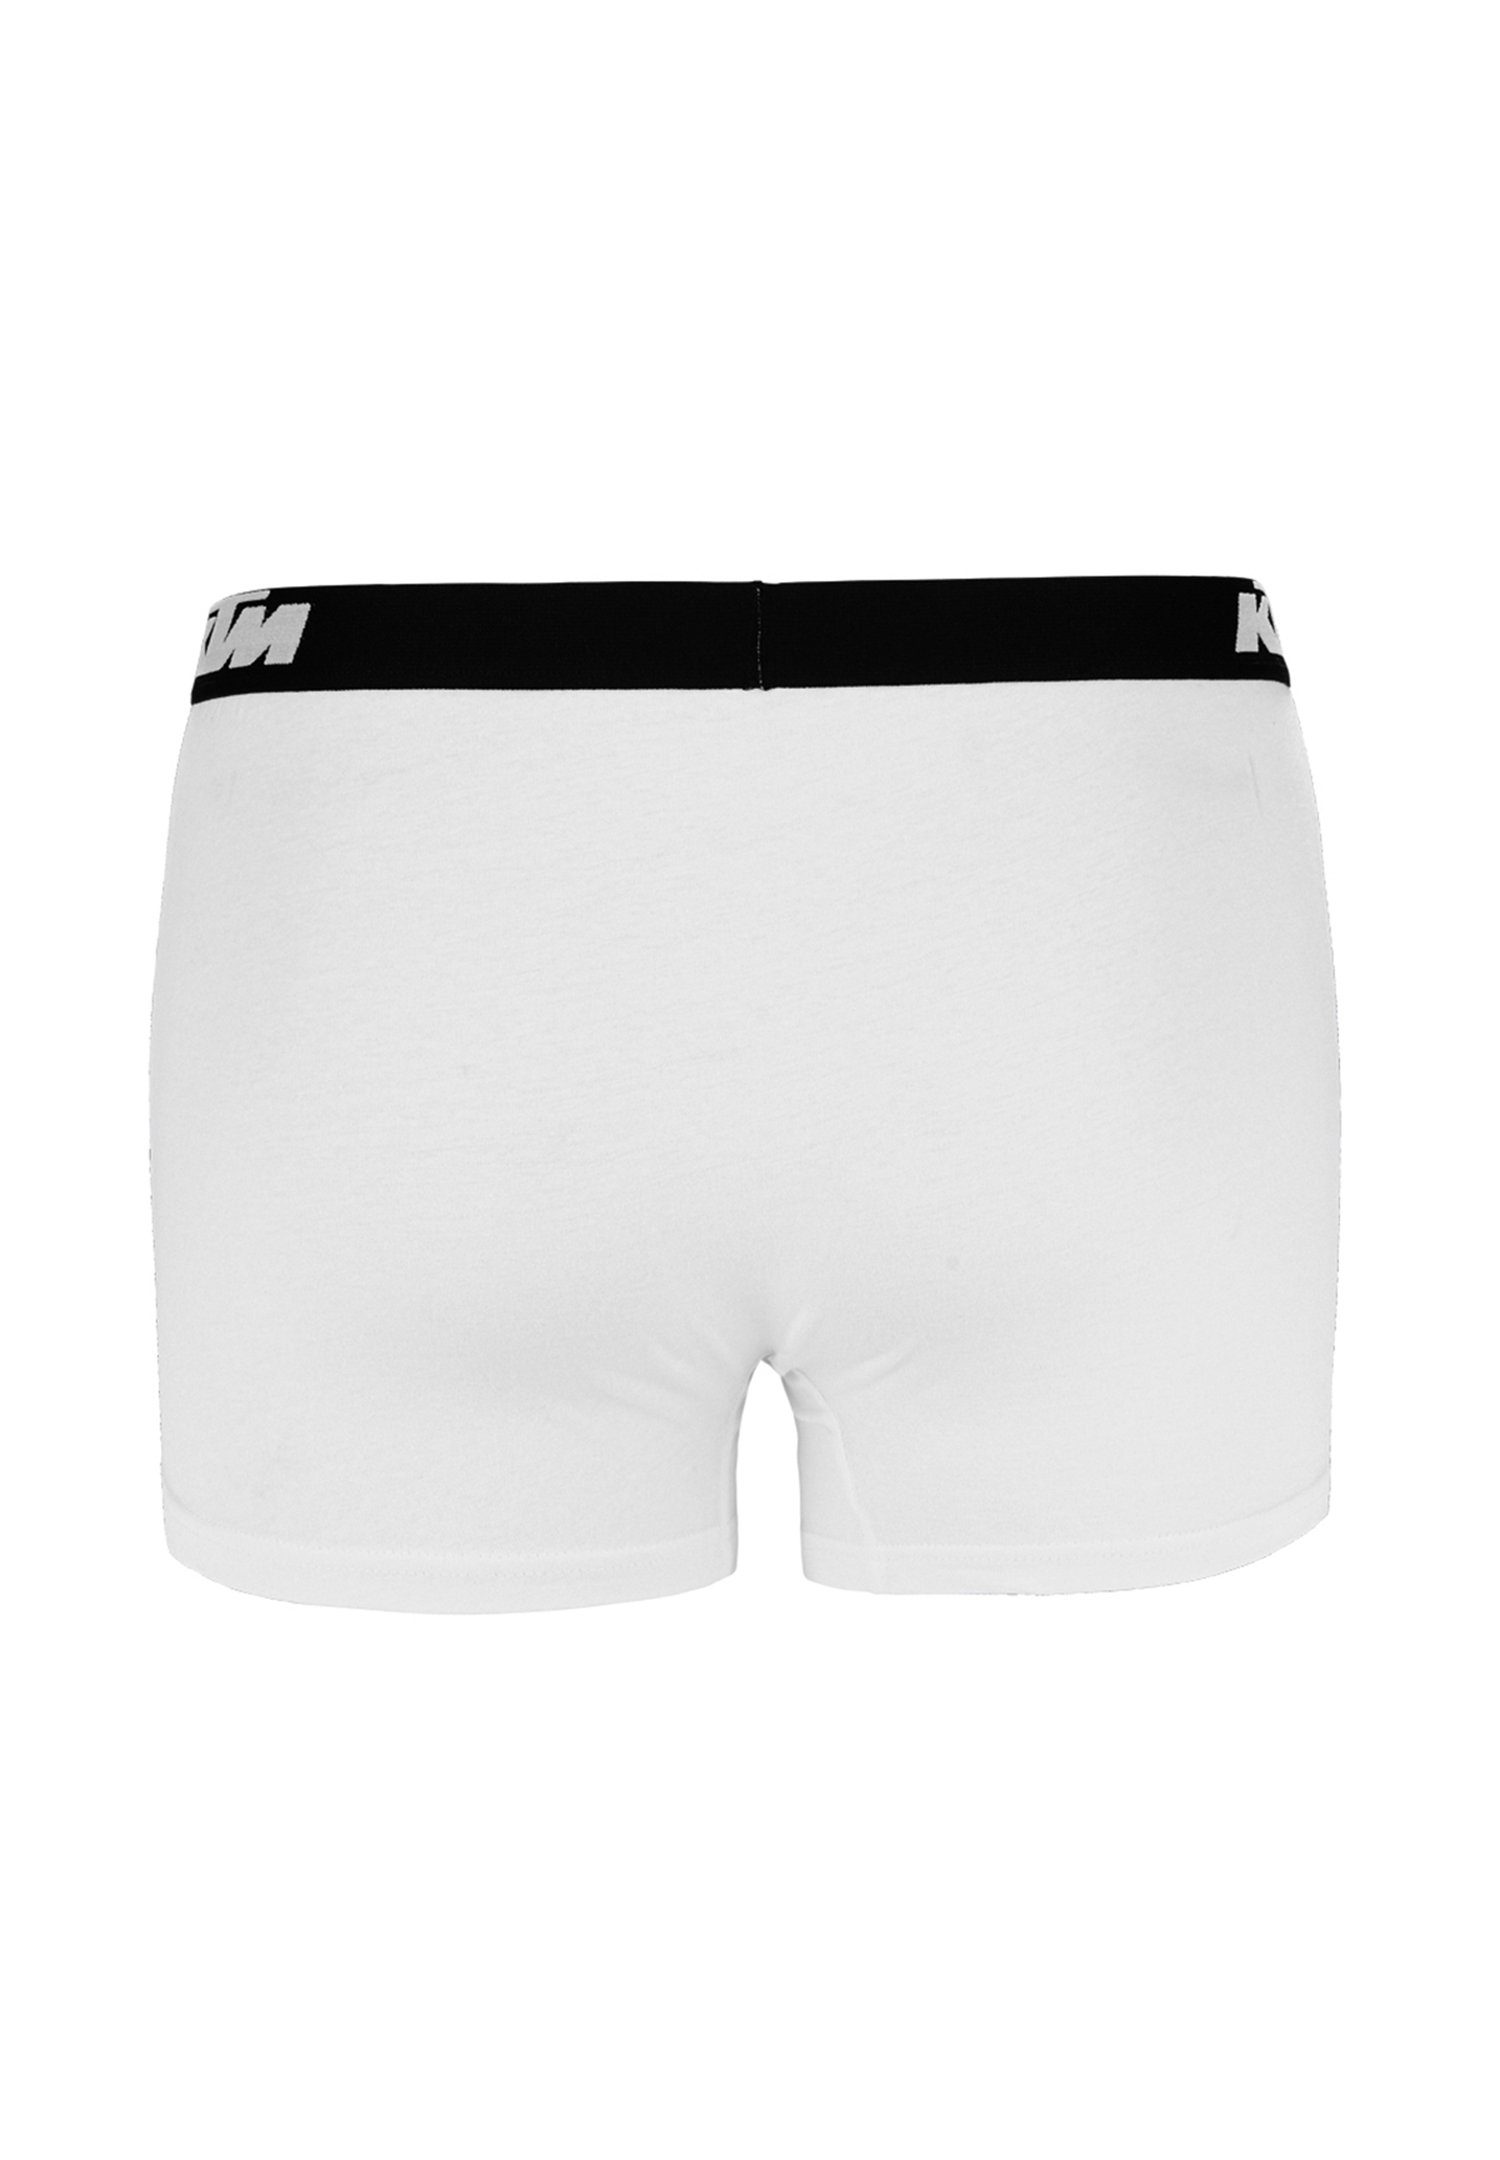 Man (2-St) / Grey White X2 KTM Boxershorts Pack Light Boxer Cotton